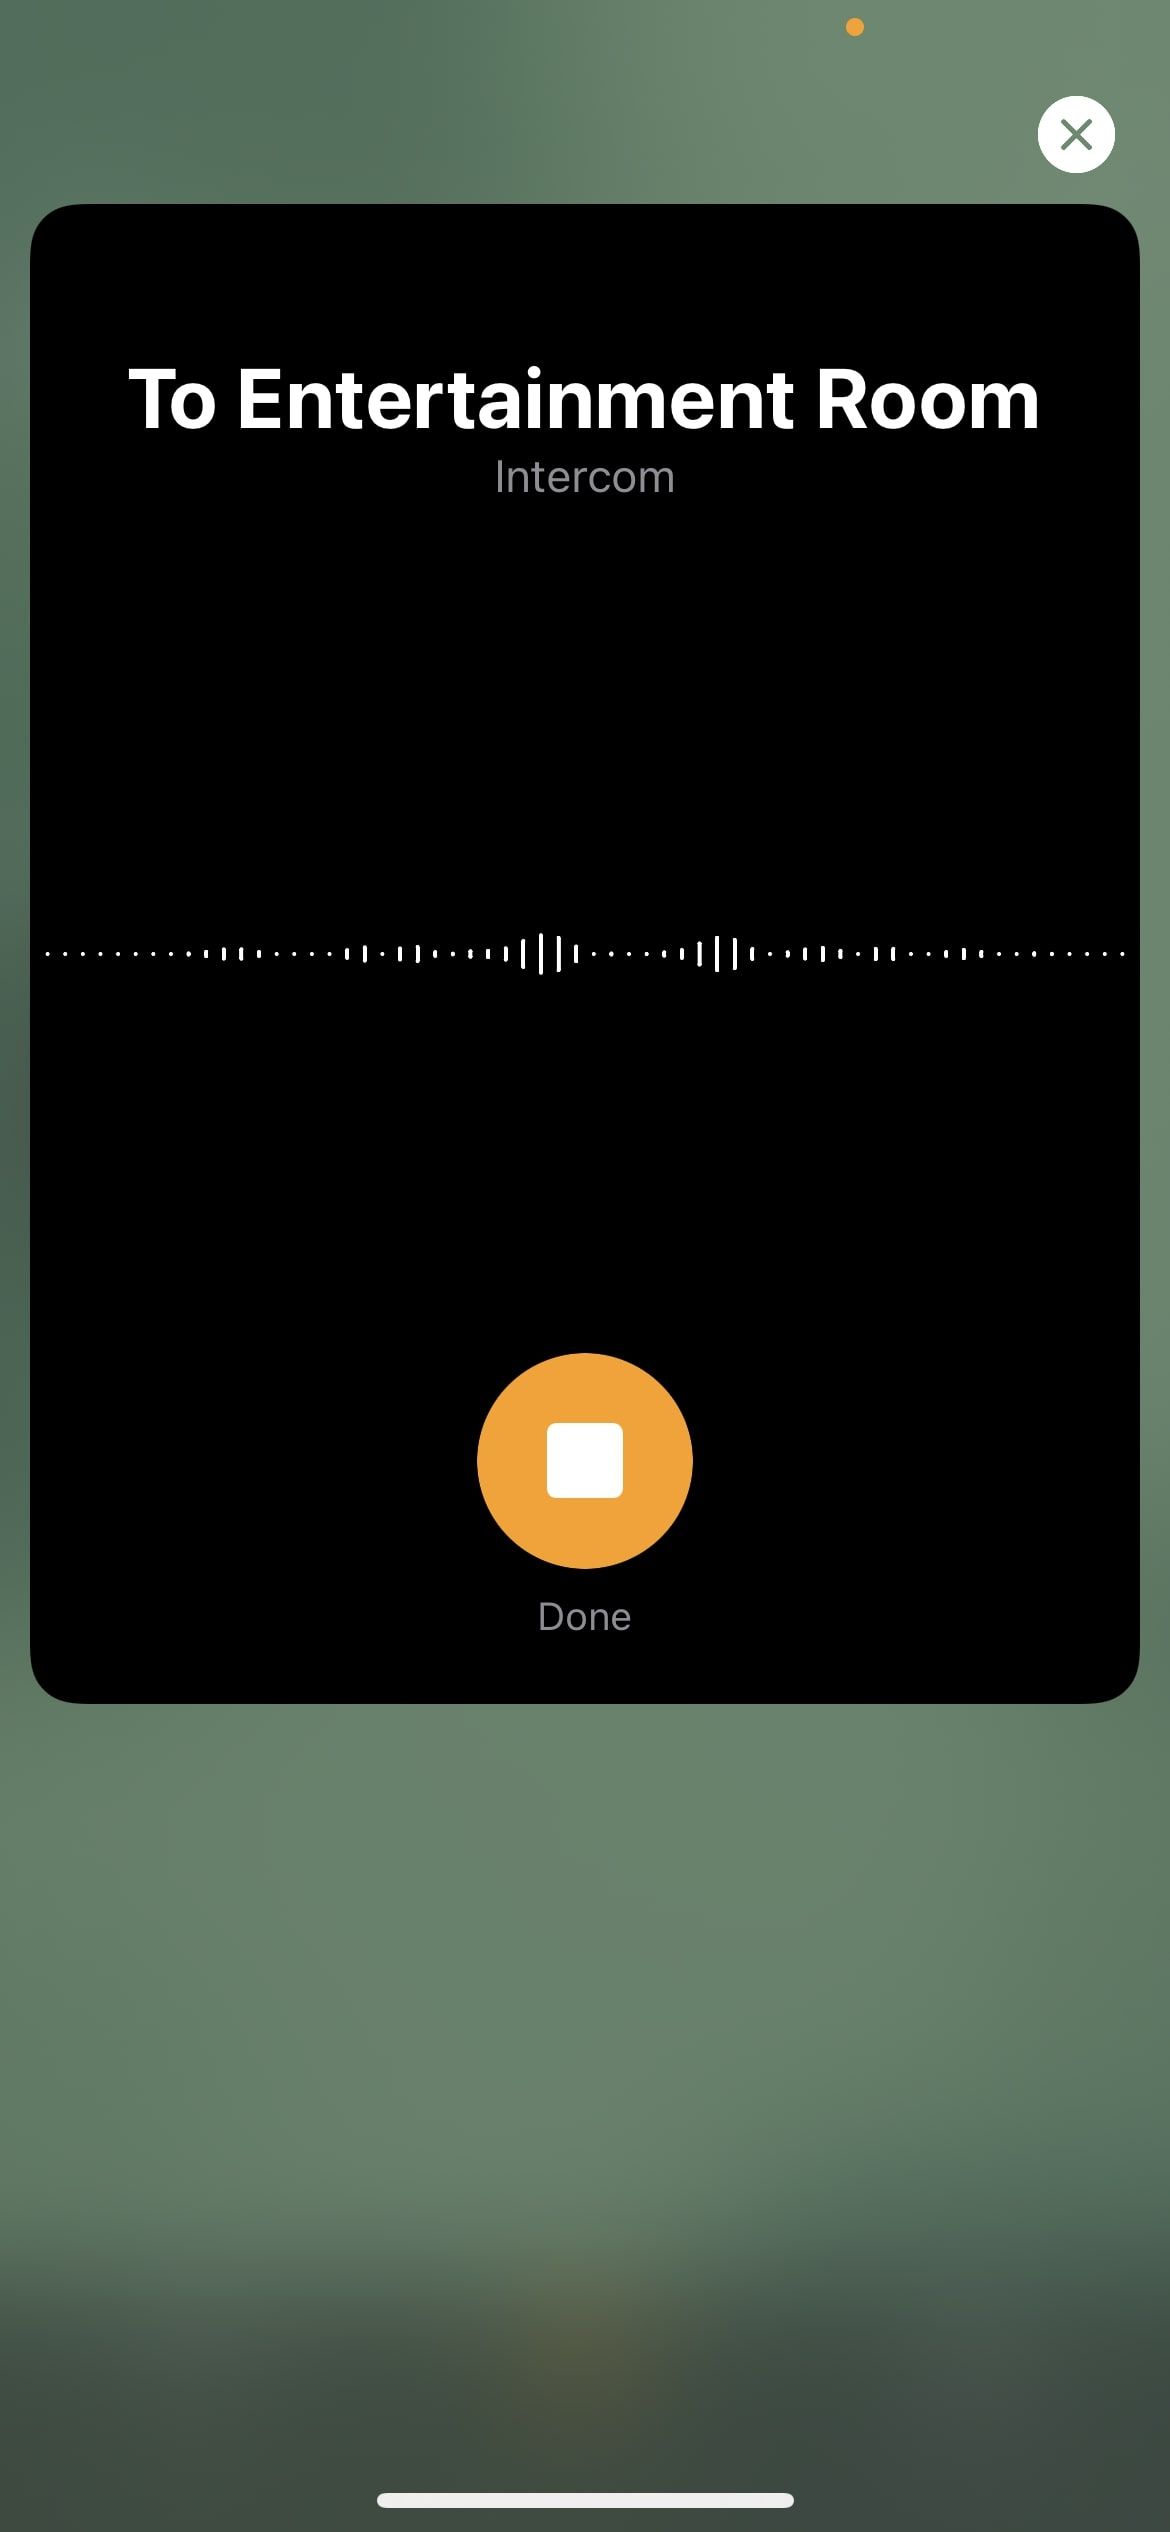 HomePod mini intercom feature on iPhone